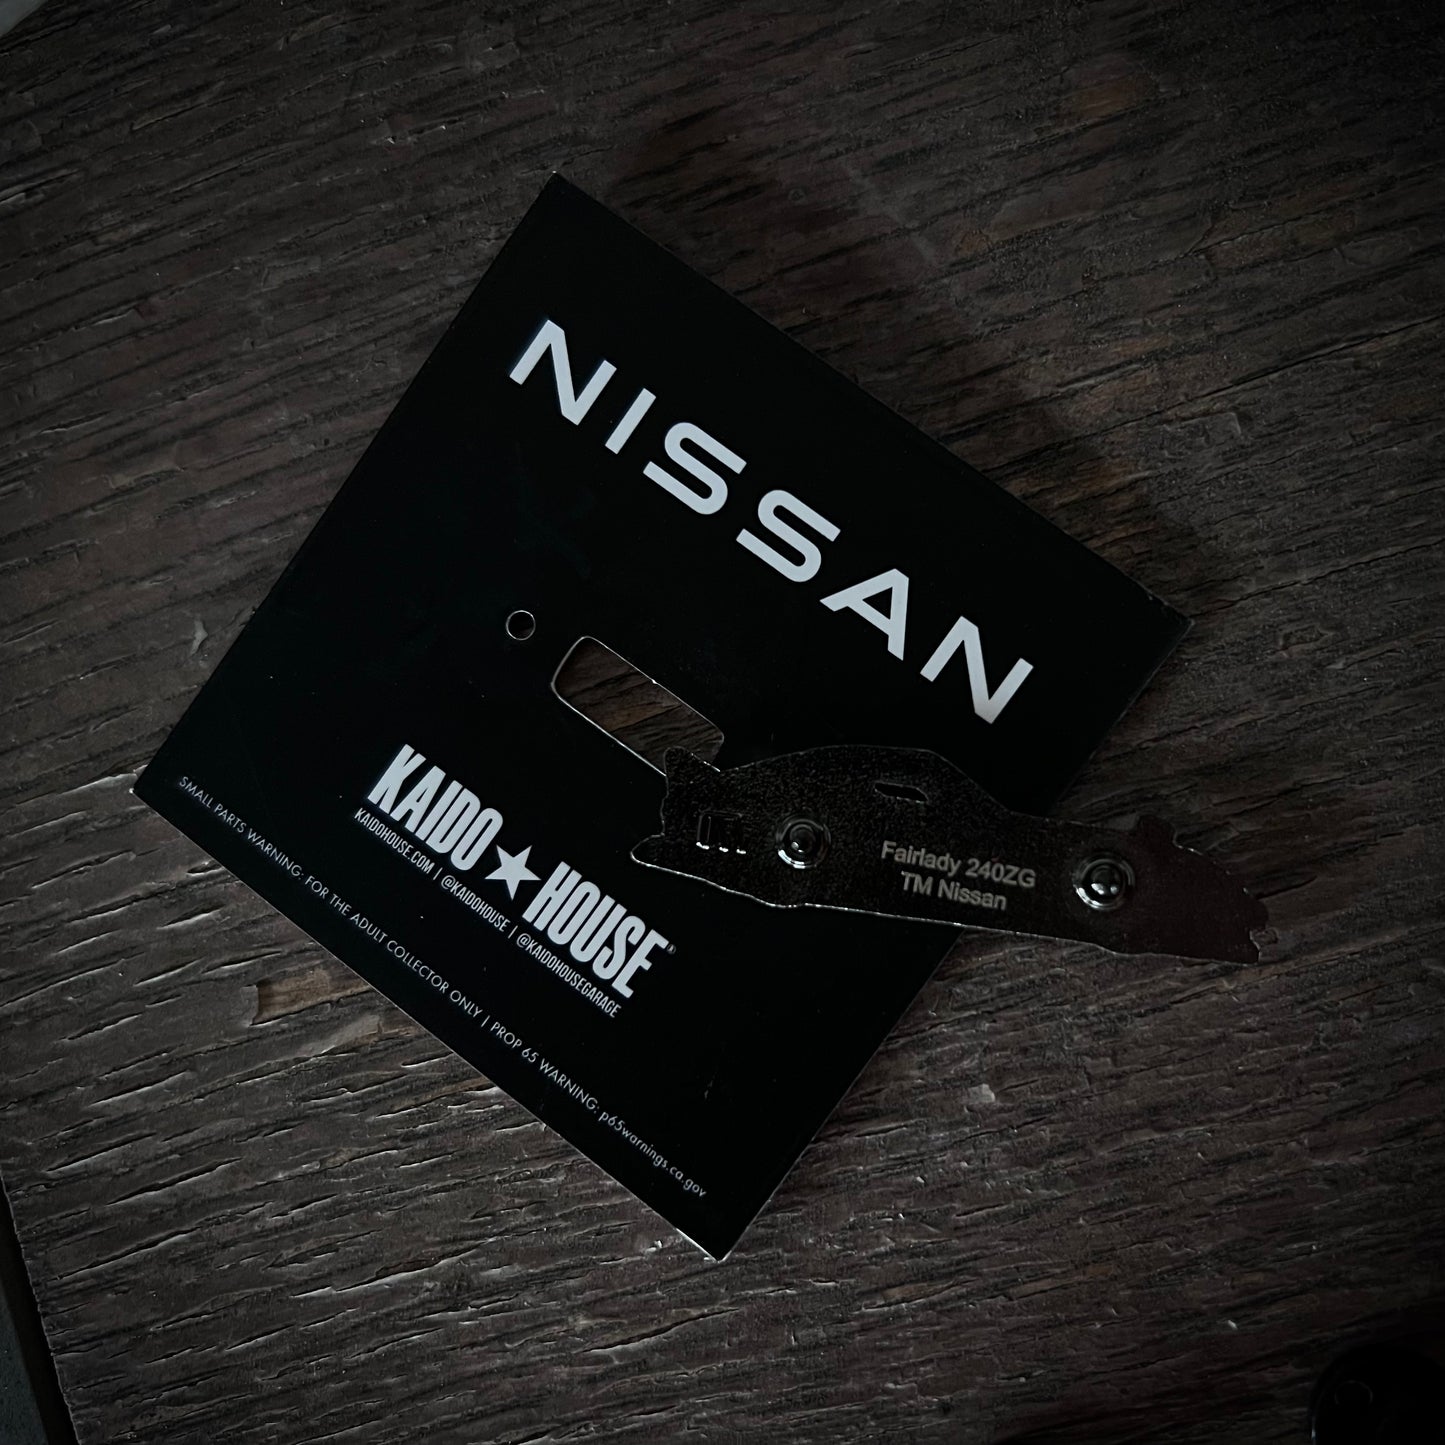 Nissan Fairlady 240ZG Omori Works enamel pin